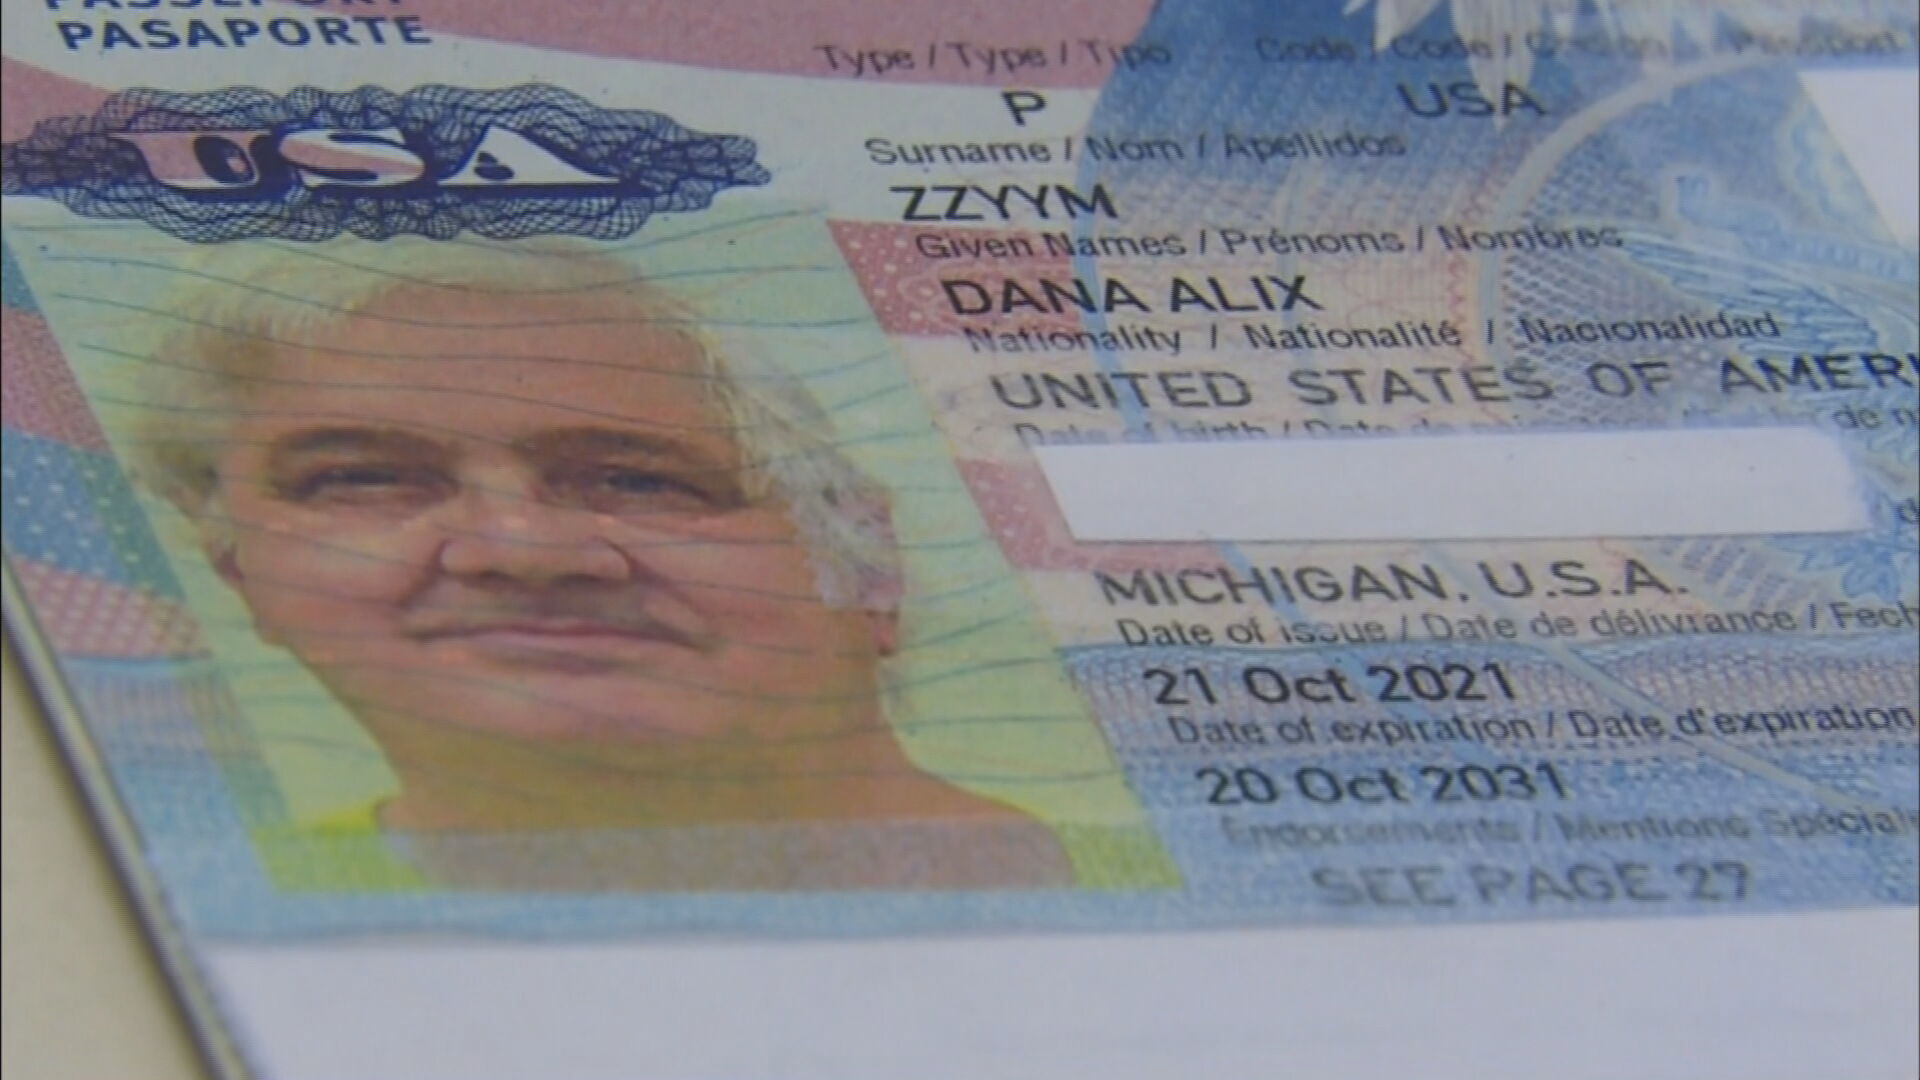 ‘Makes Americans More Free’: Dana Zzyym Issued 1st U.S. Passport With Gender X Designation